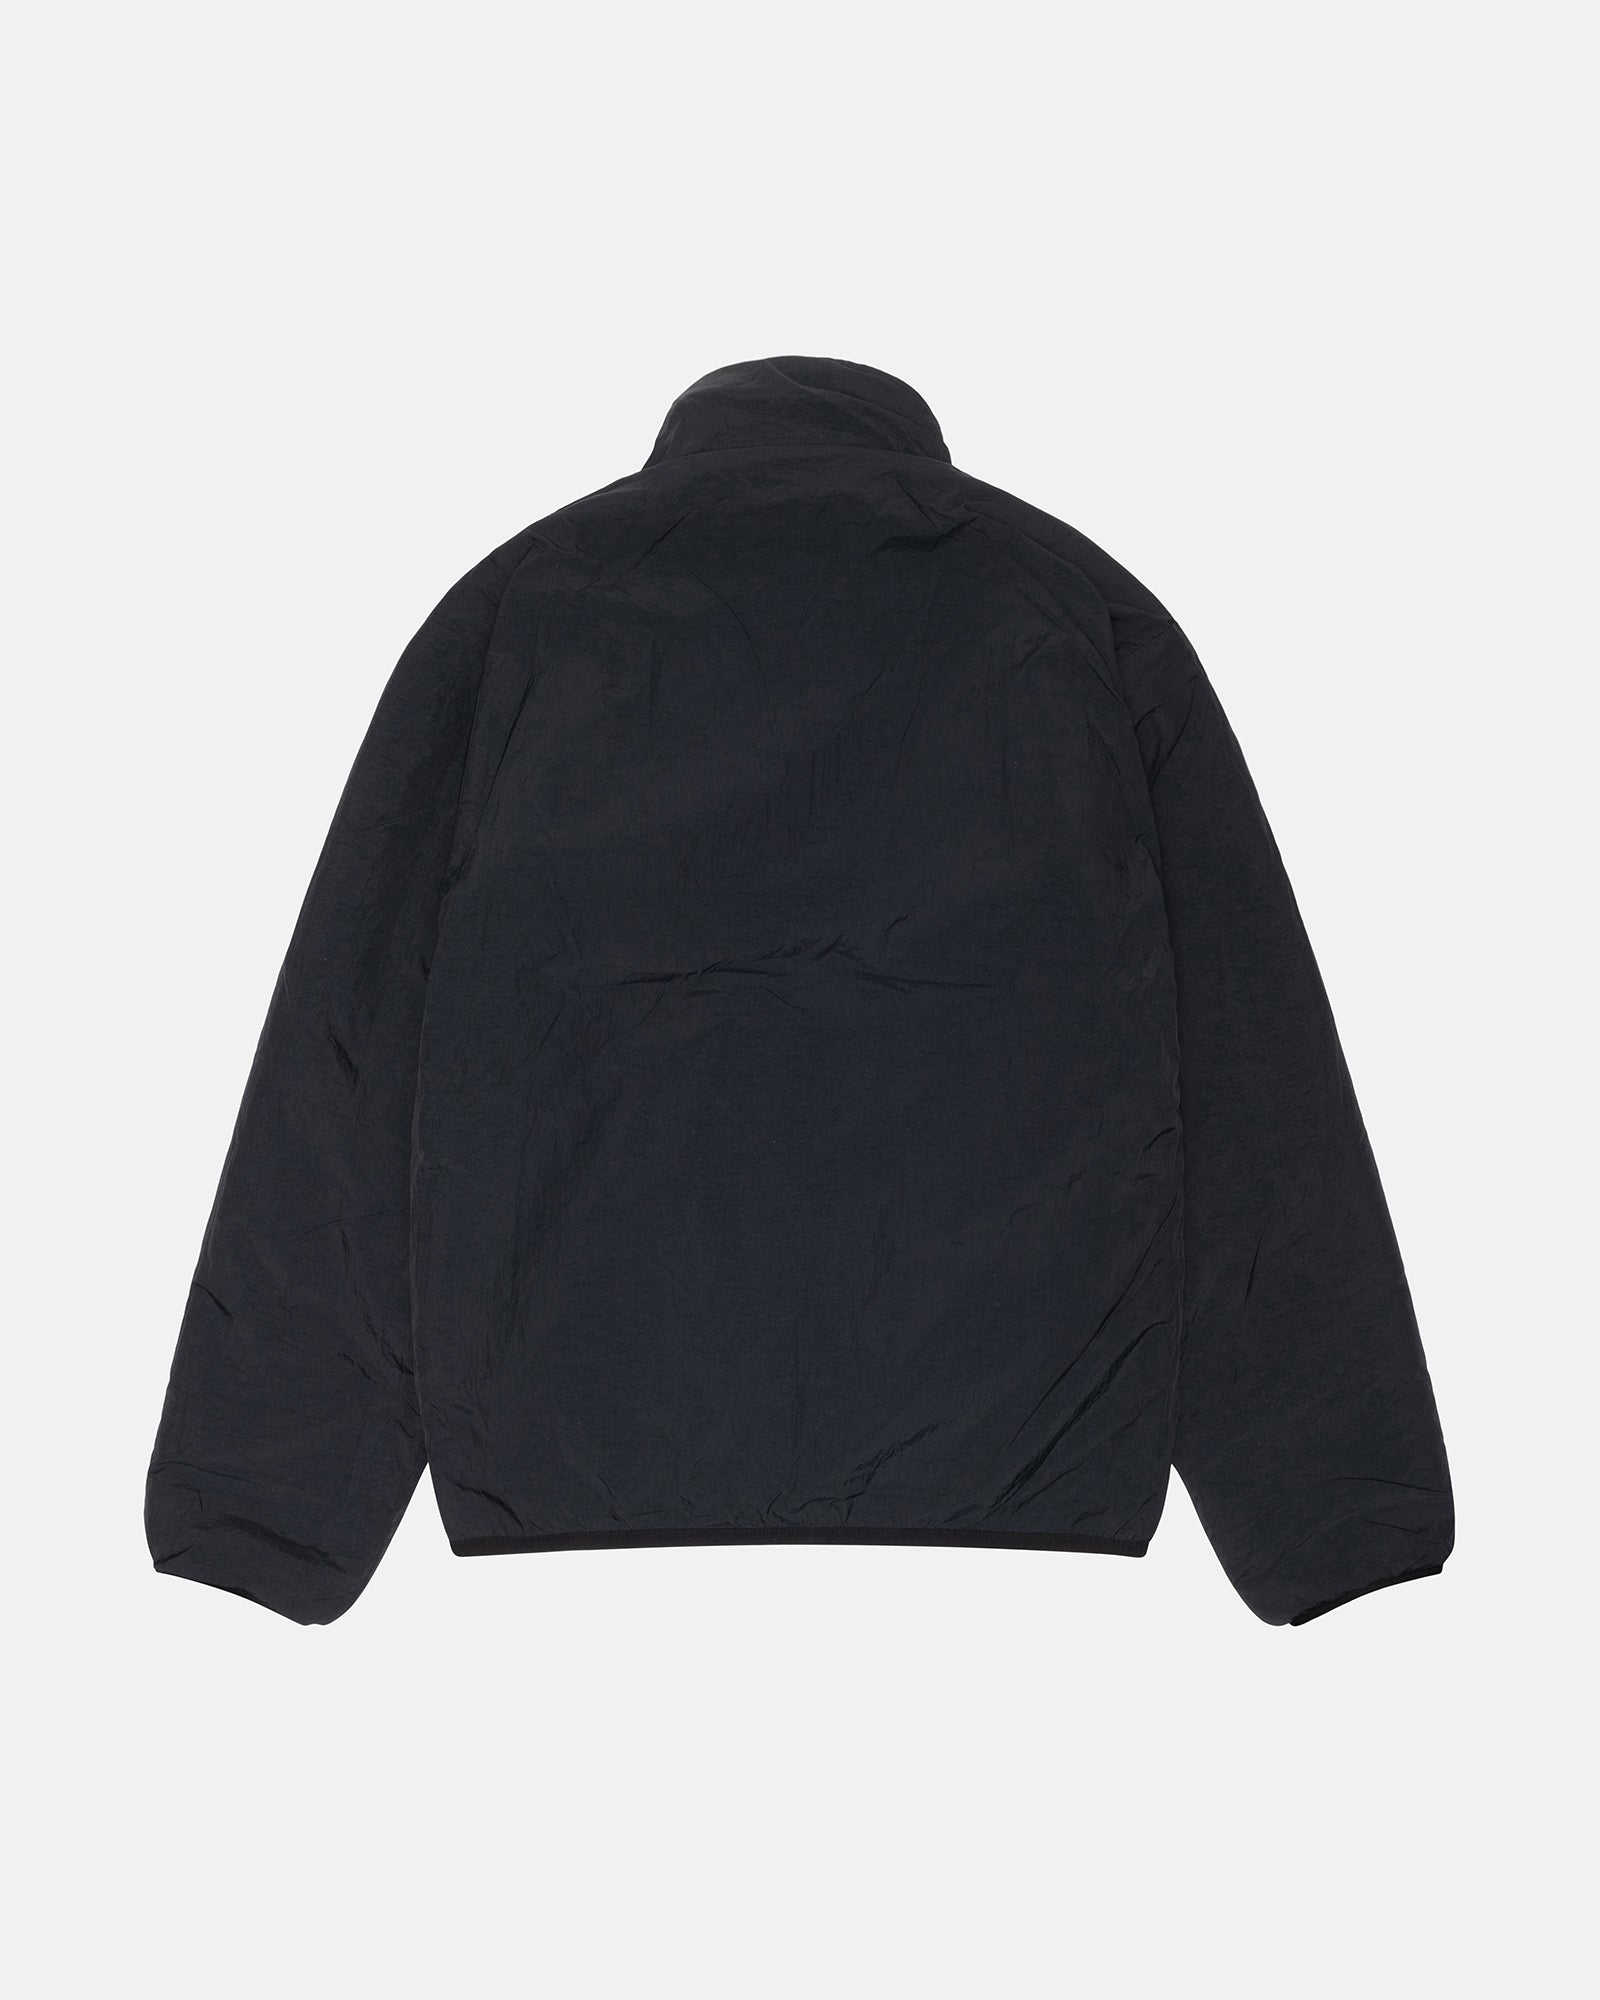 Sherpa Reversible Vest Black Outerwear